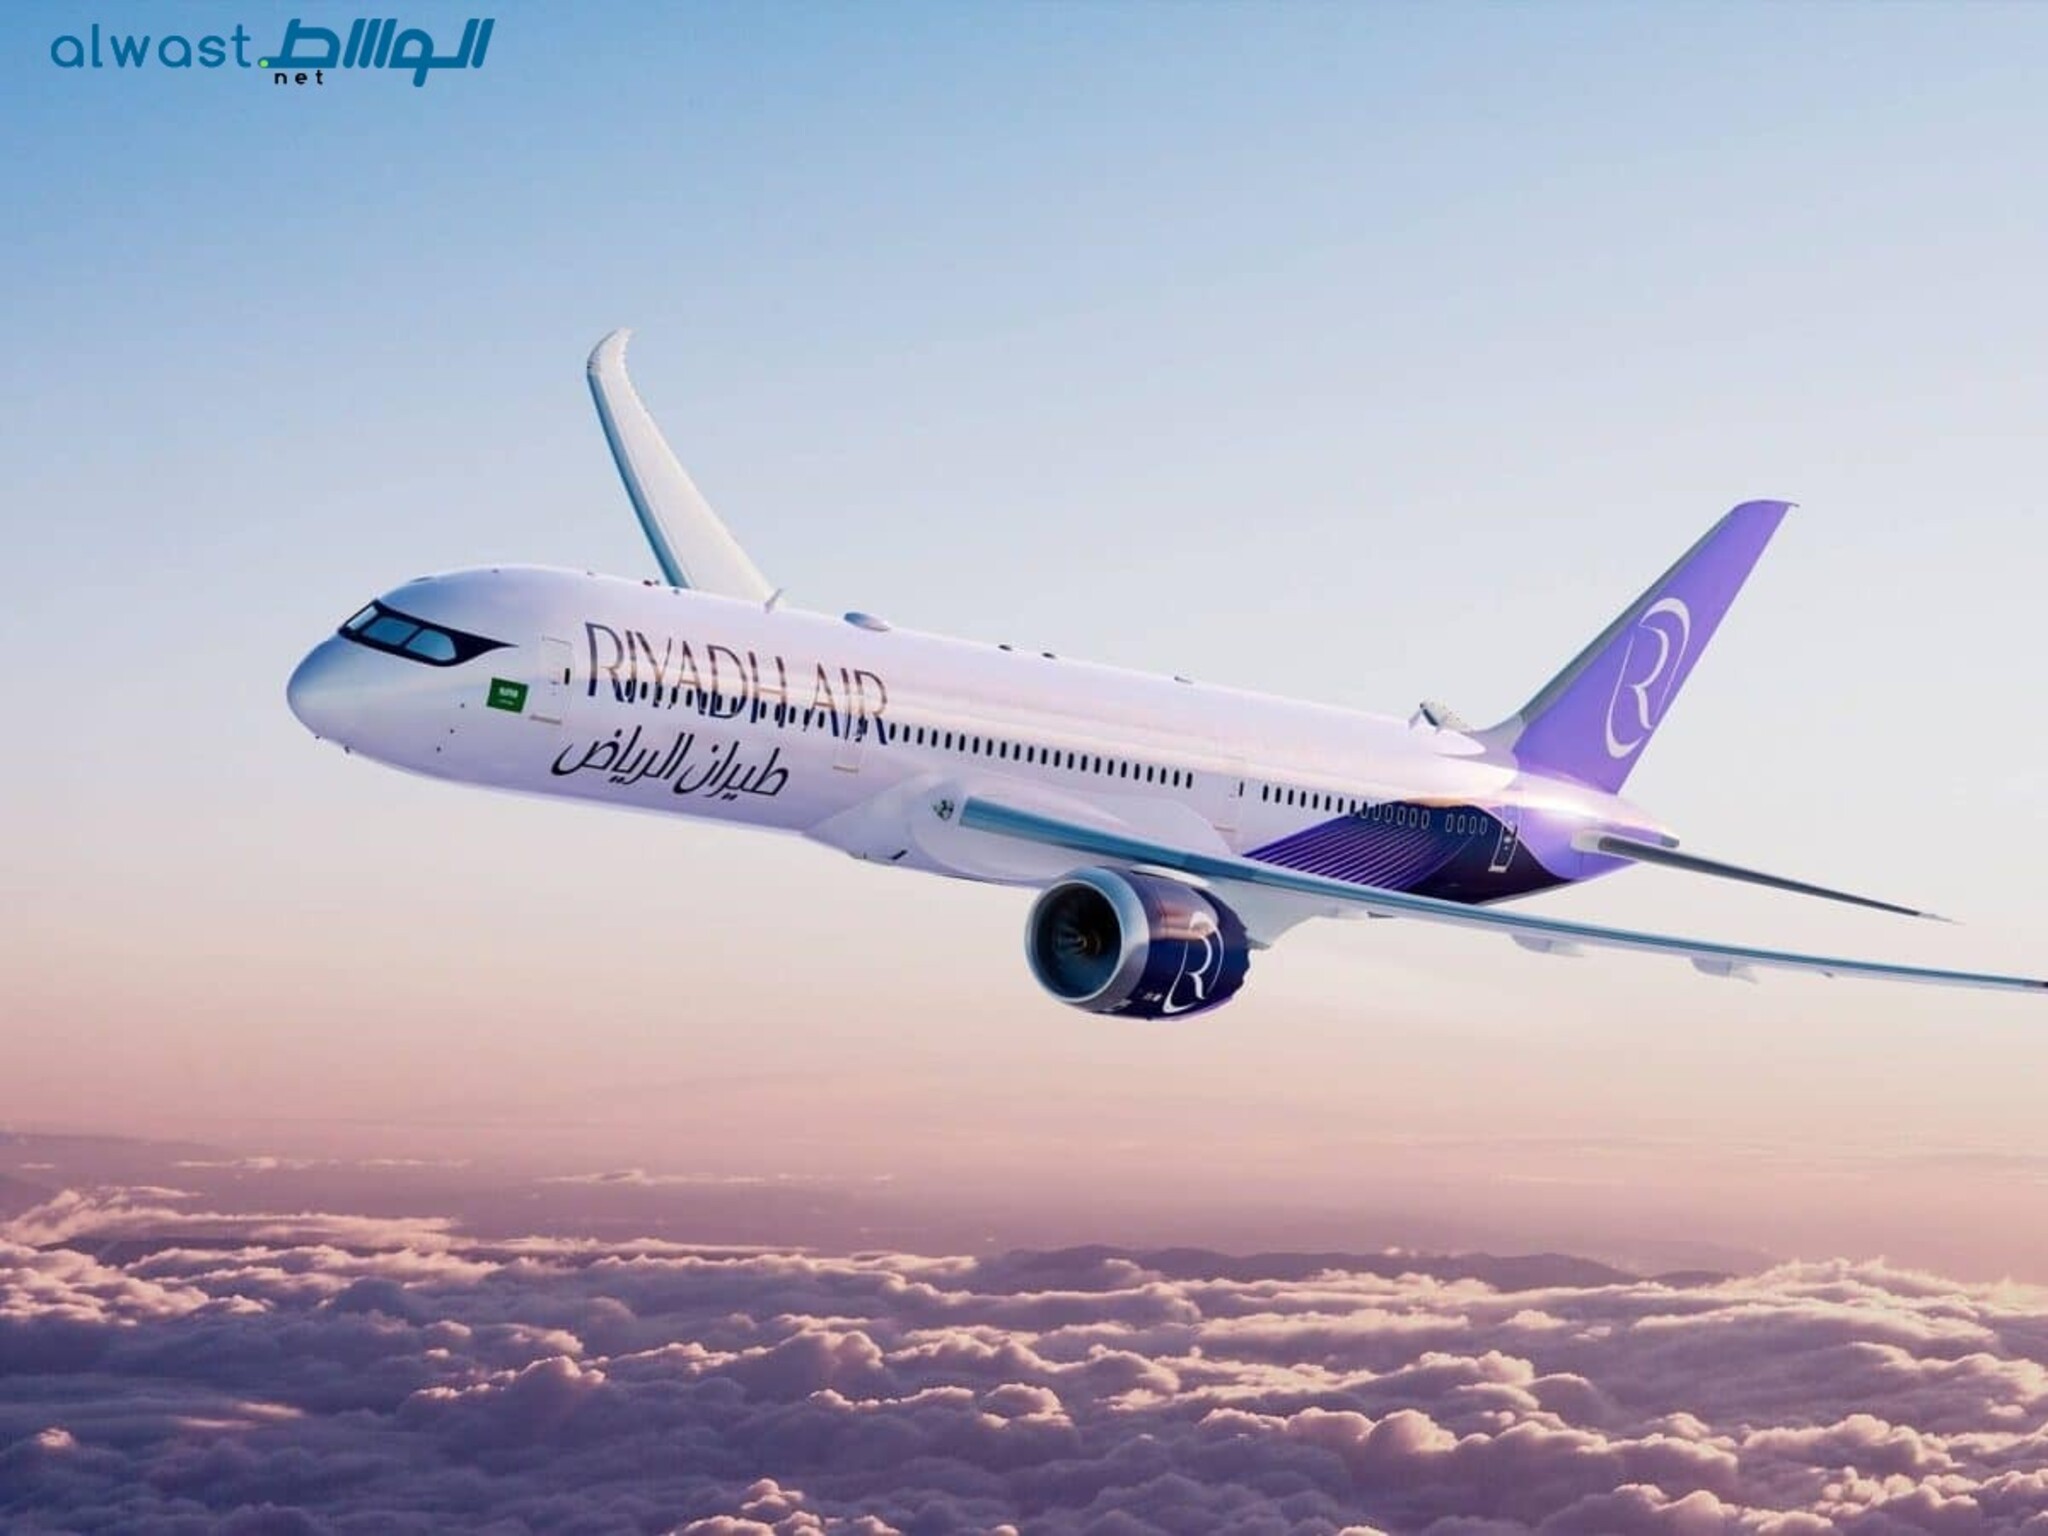 Riyadh Air announces new strategic partnerships and global agreements